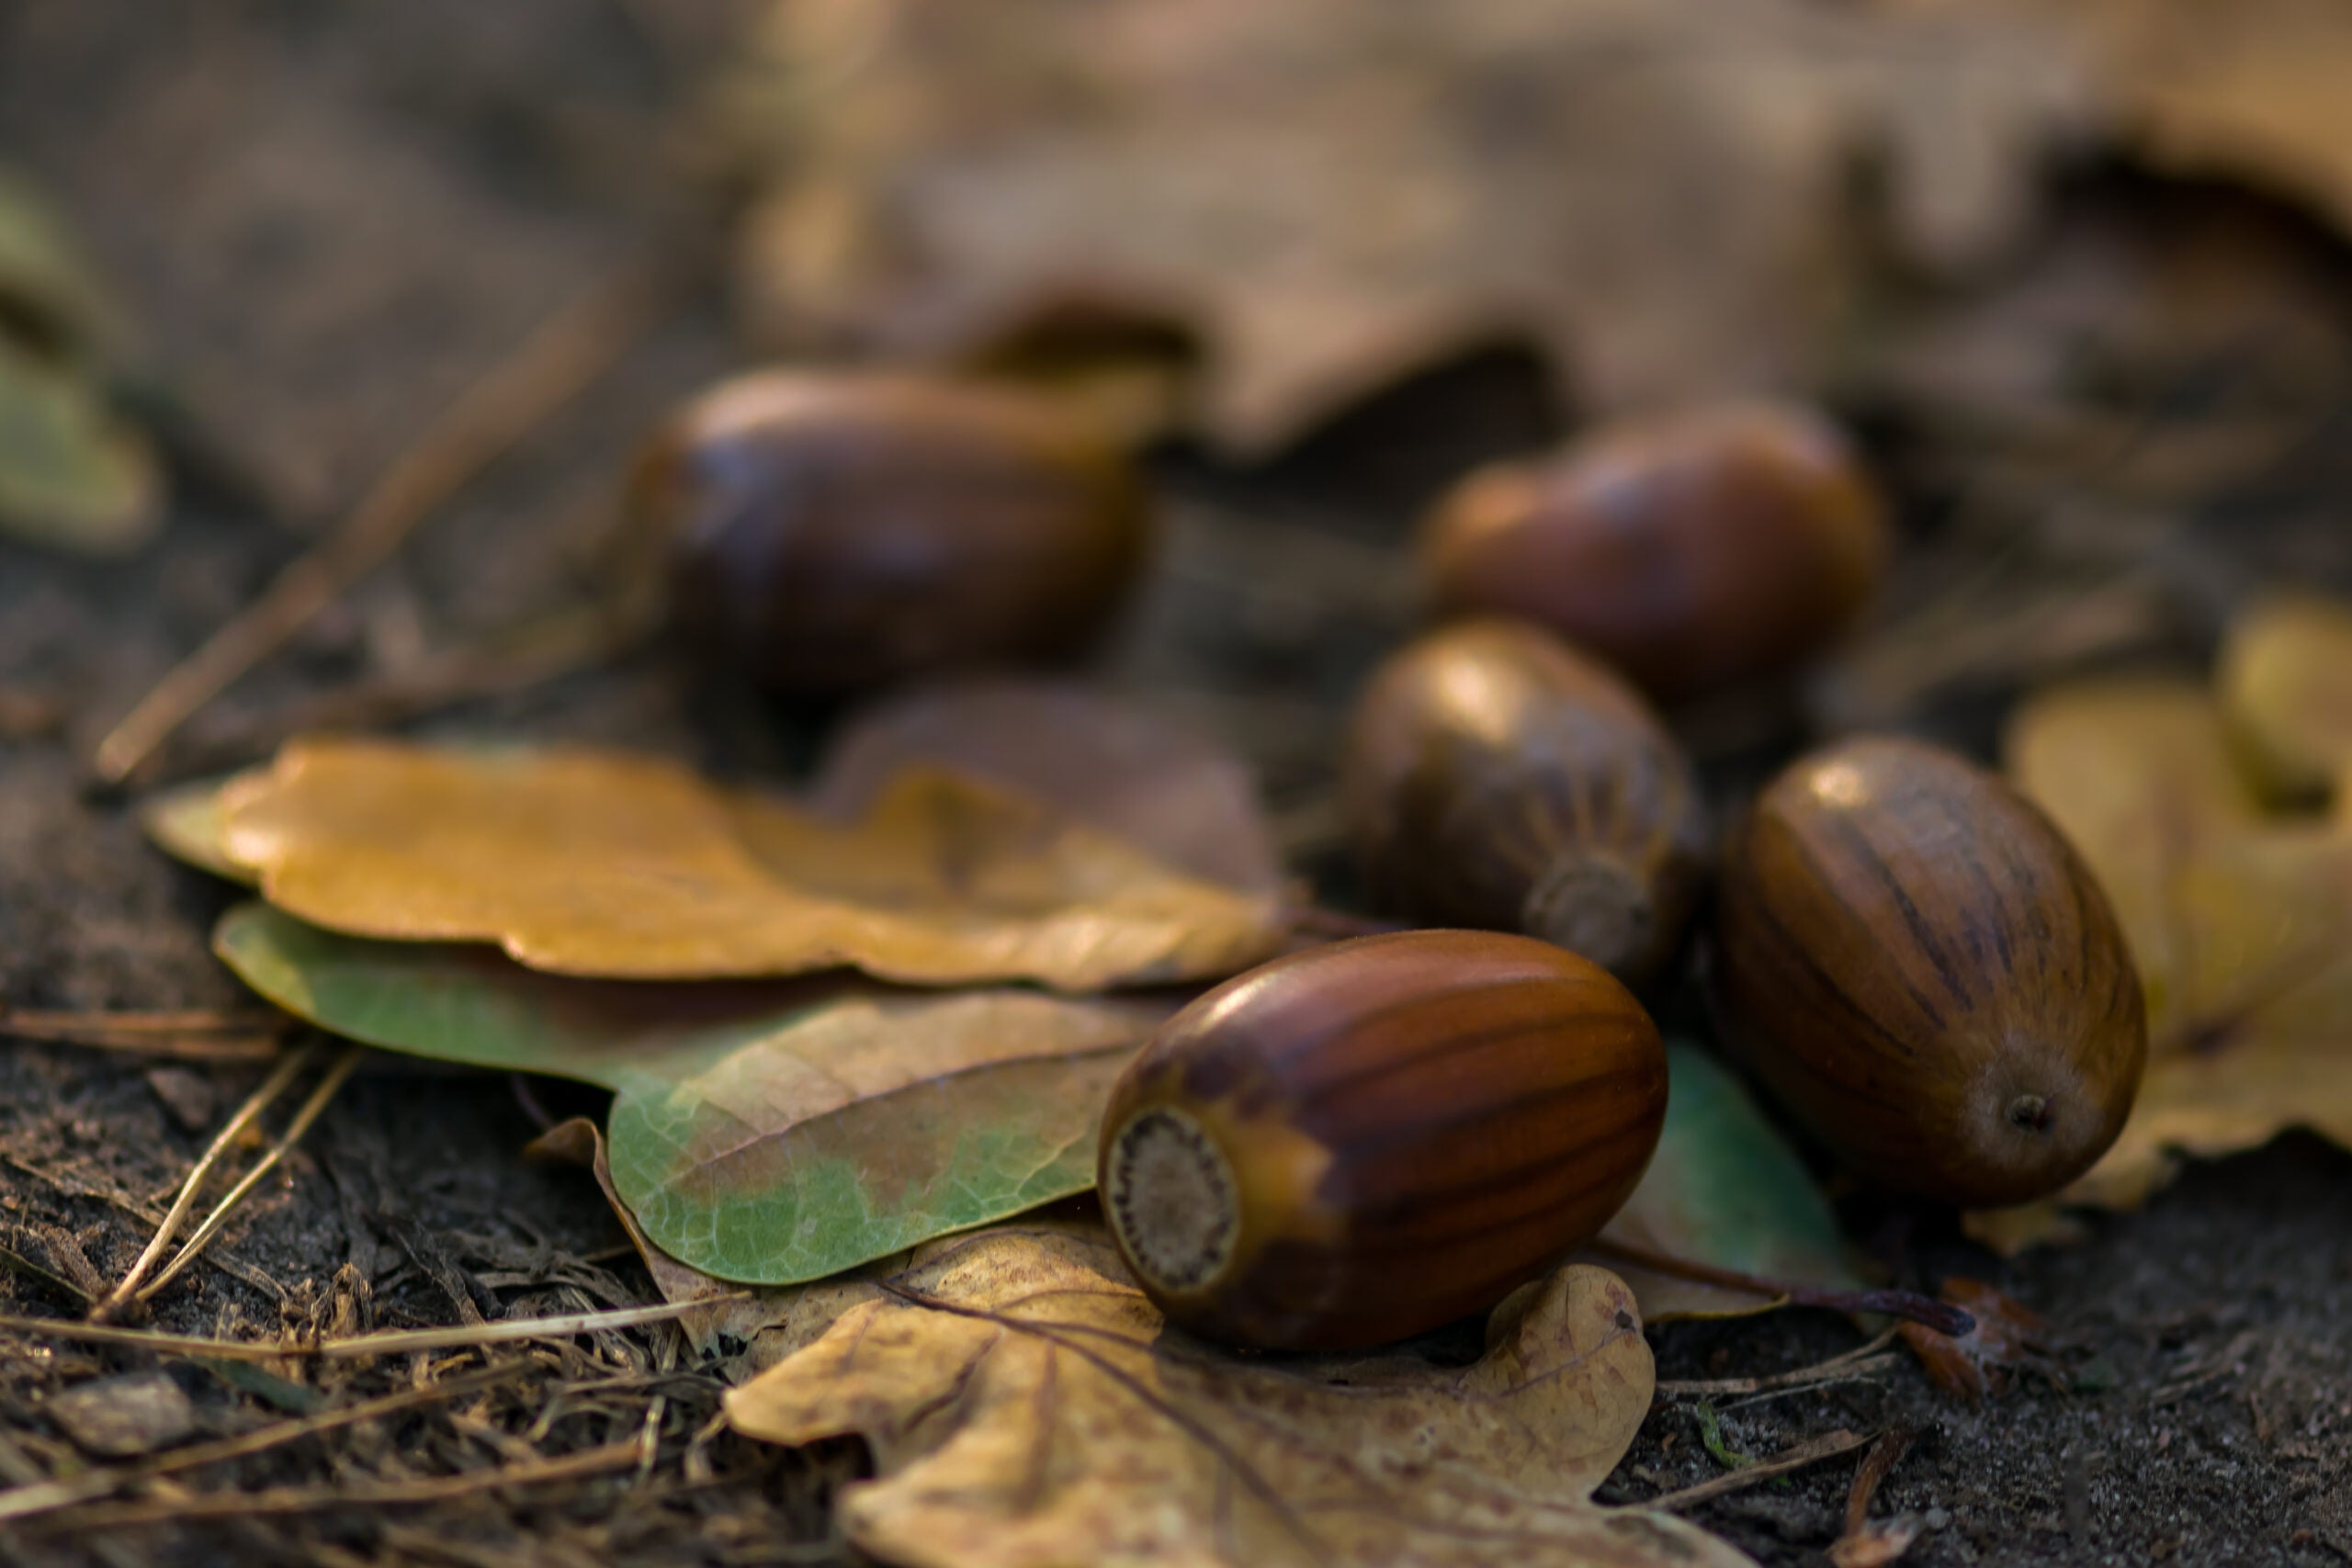 acorns lying on forest floor